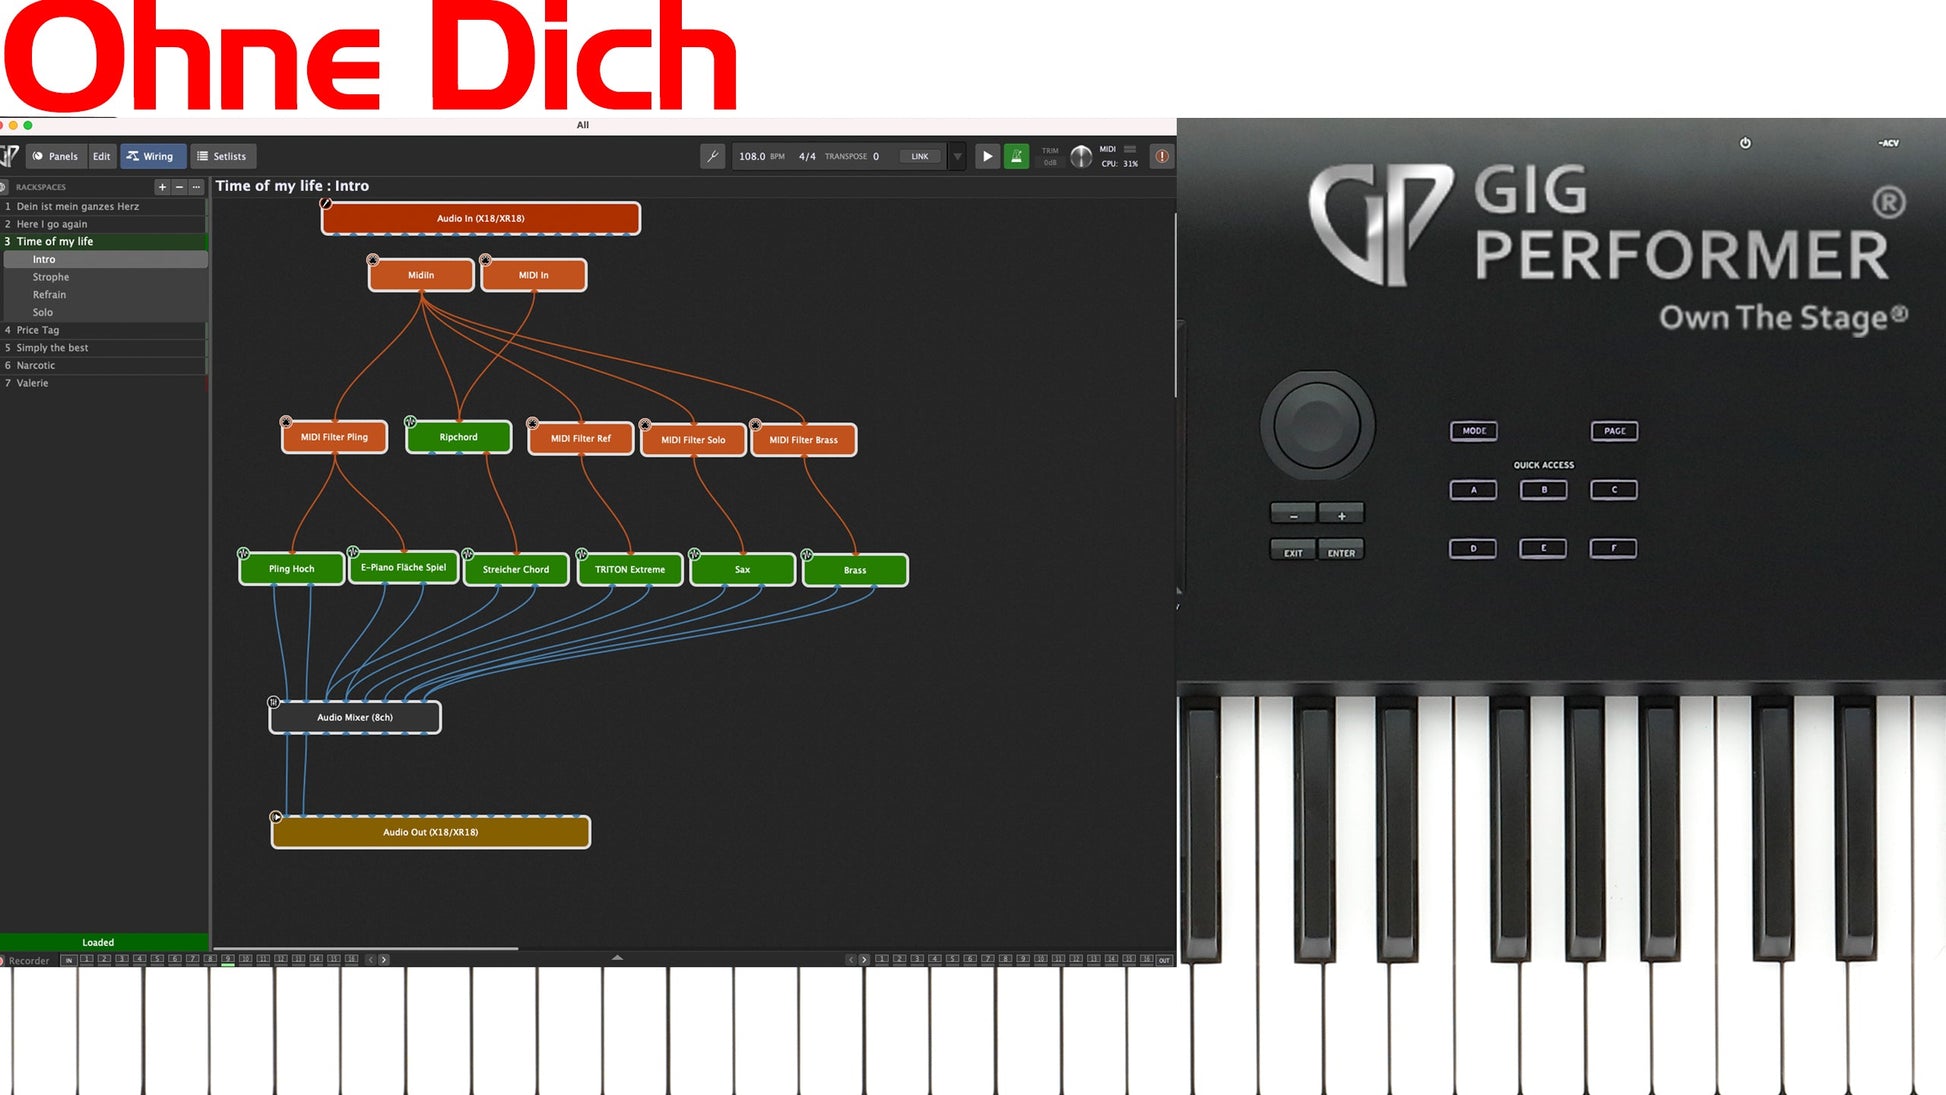 Gig Performer Rackspace - Ohne Dich (Mac) - Thorsten Hillmann Keyboard-Sounds